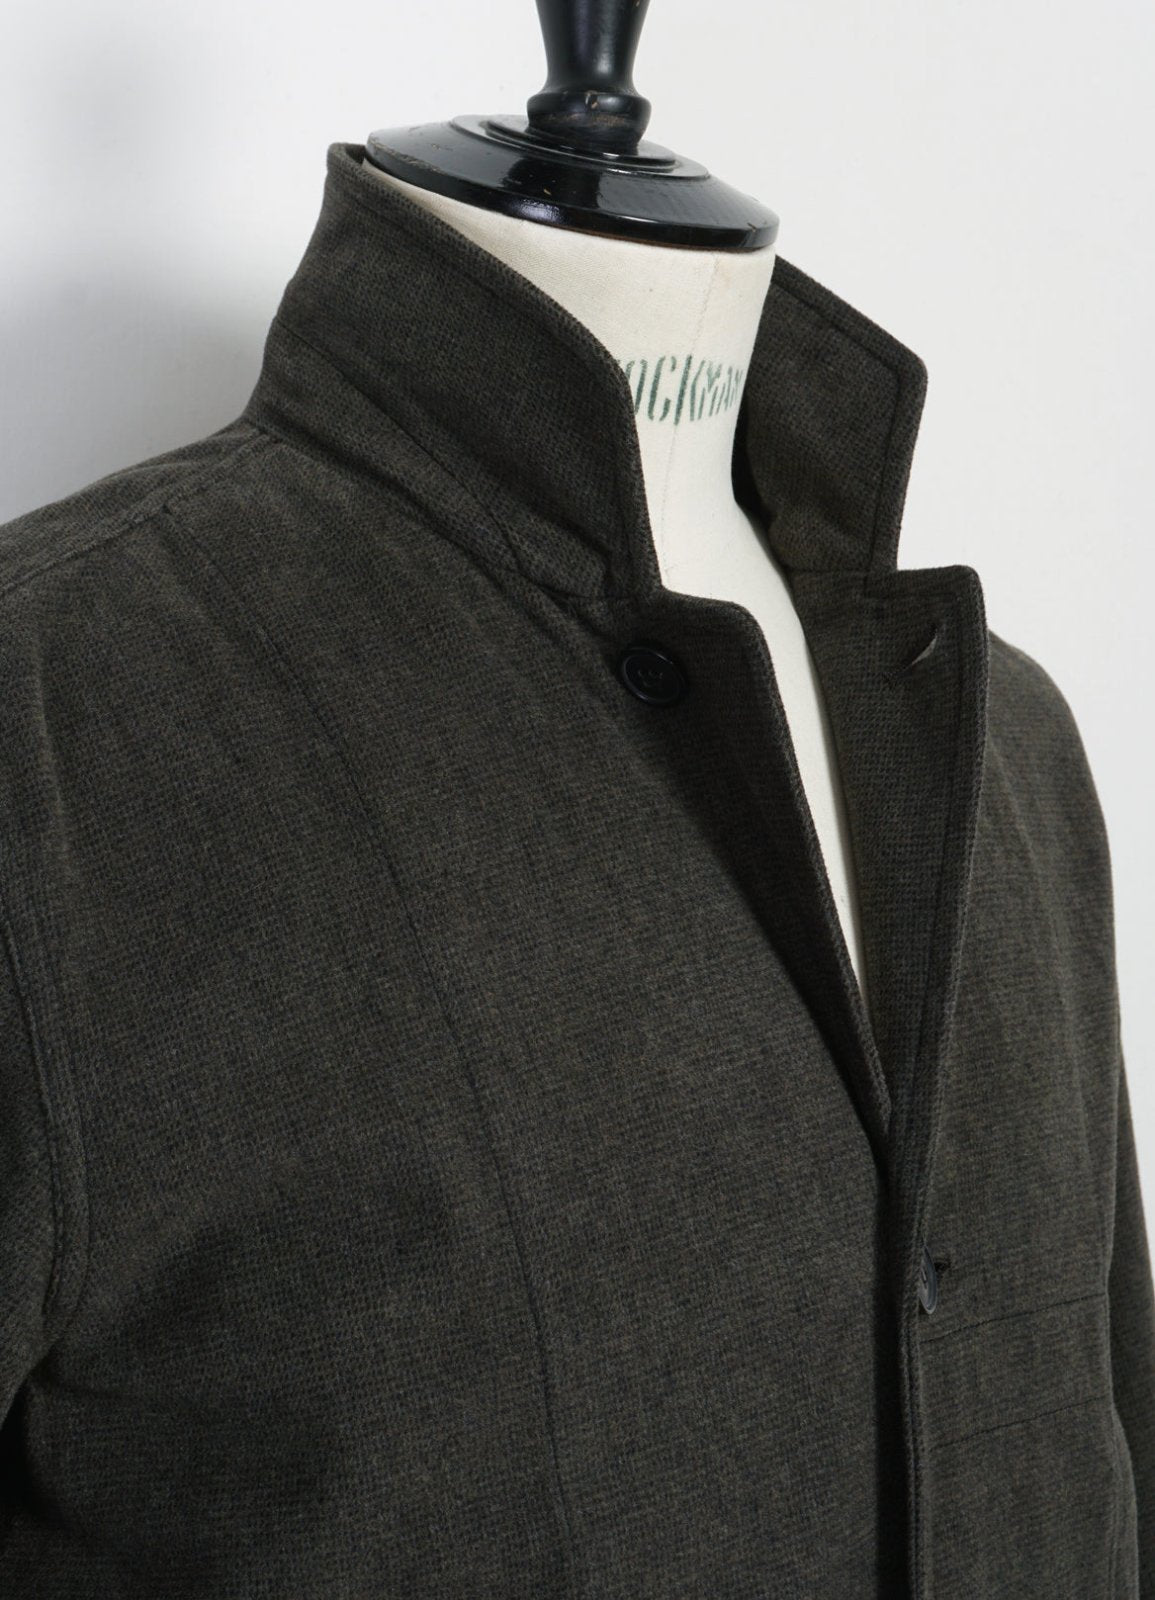 HANSEN GARMENTS - JASPER | Casual Everyday Jacket Blazer | Greenish - HANSEN Garments